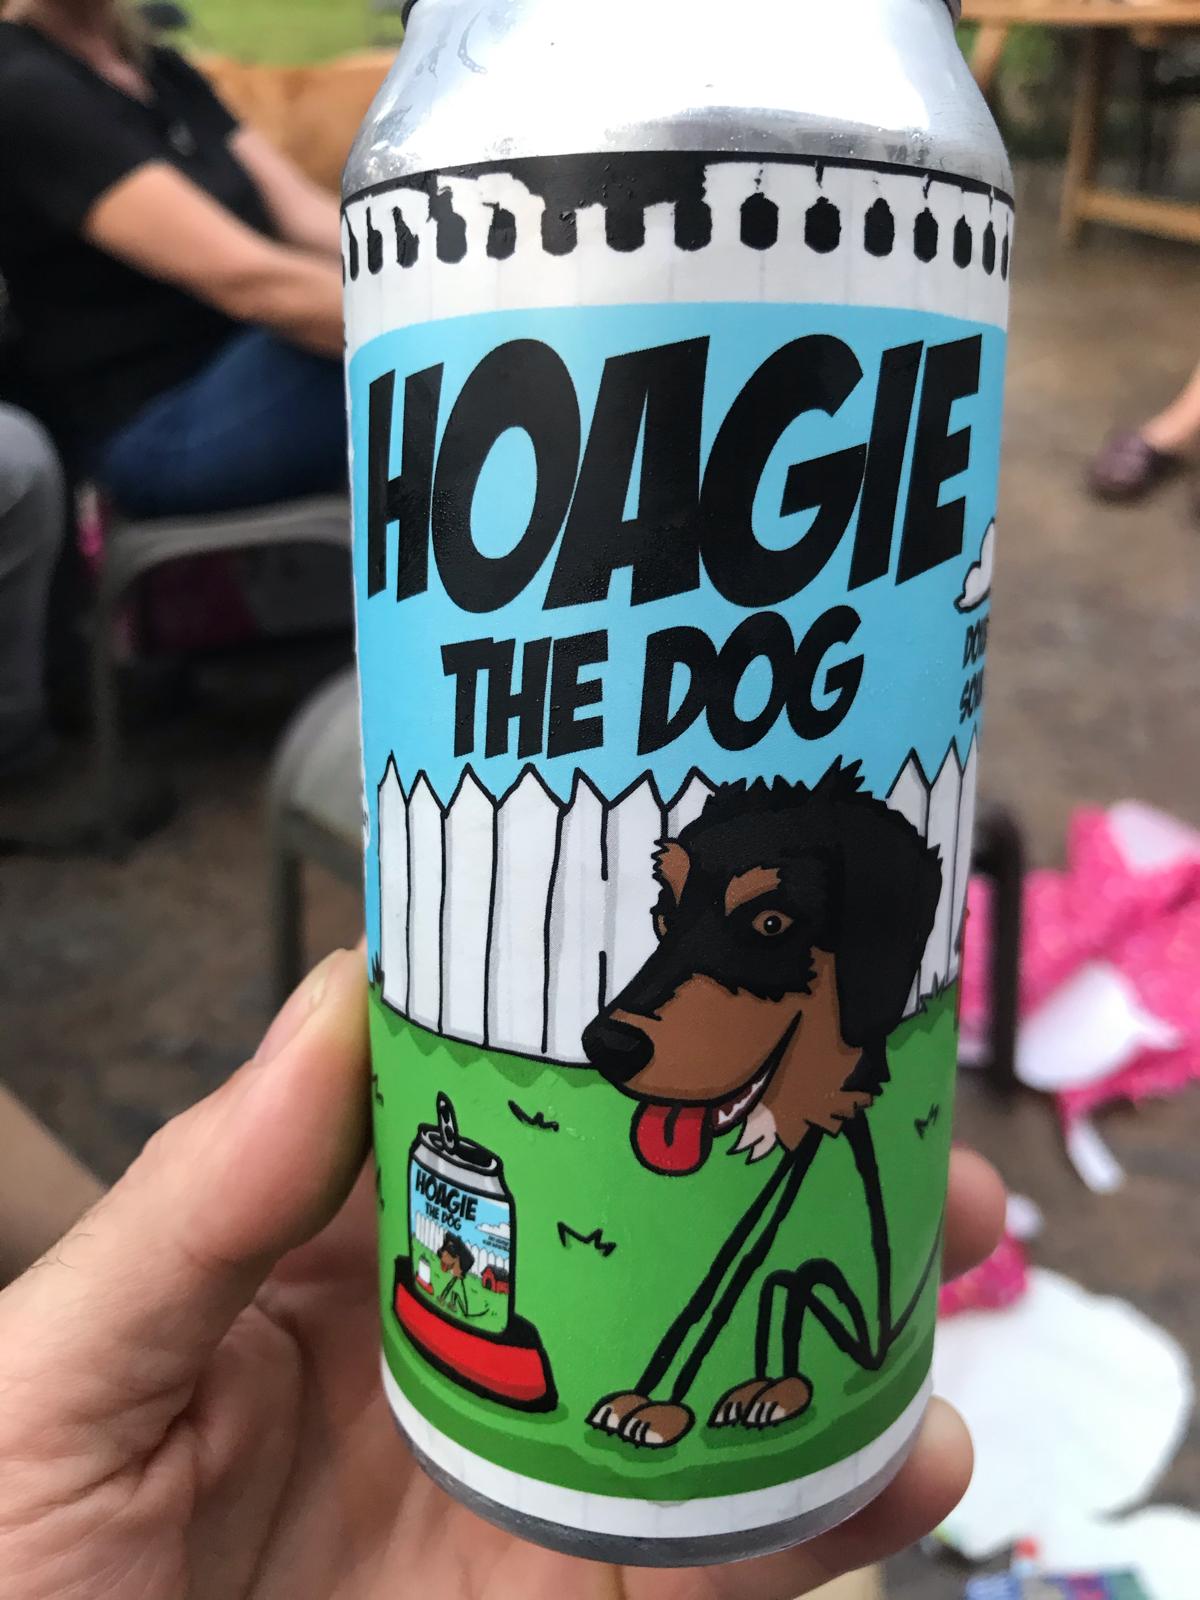 Hoagie, The Dog